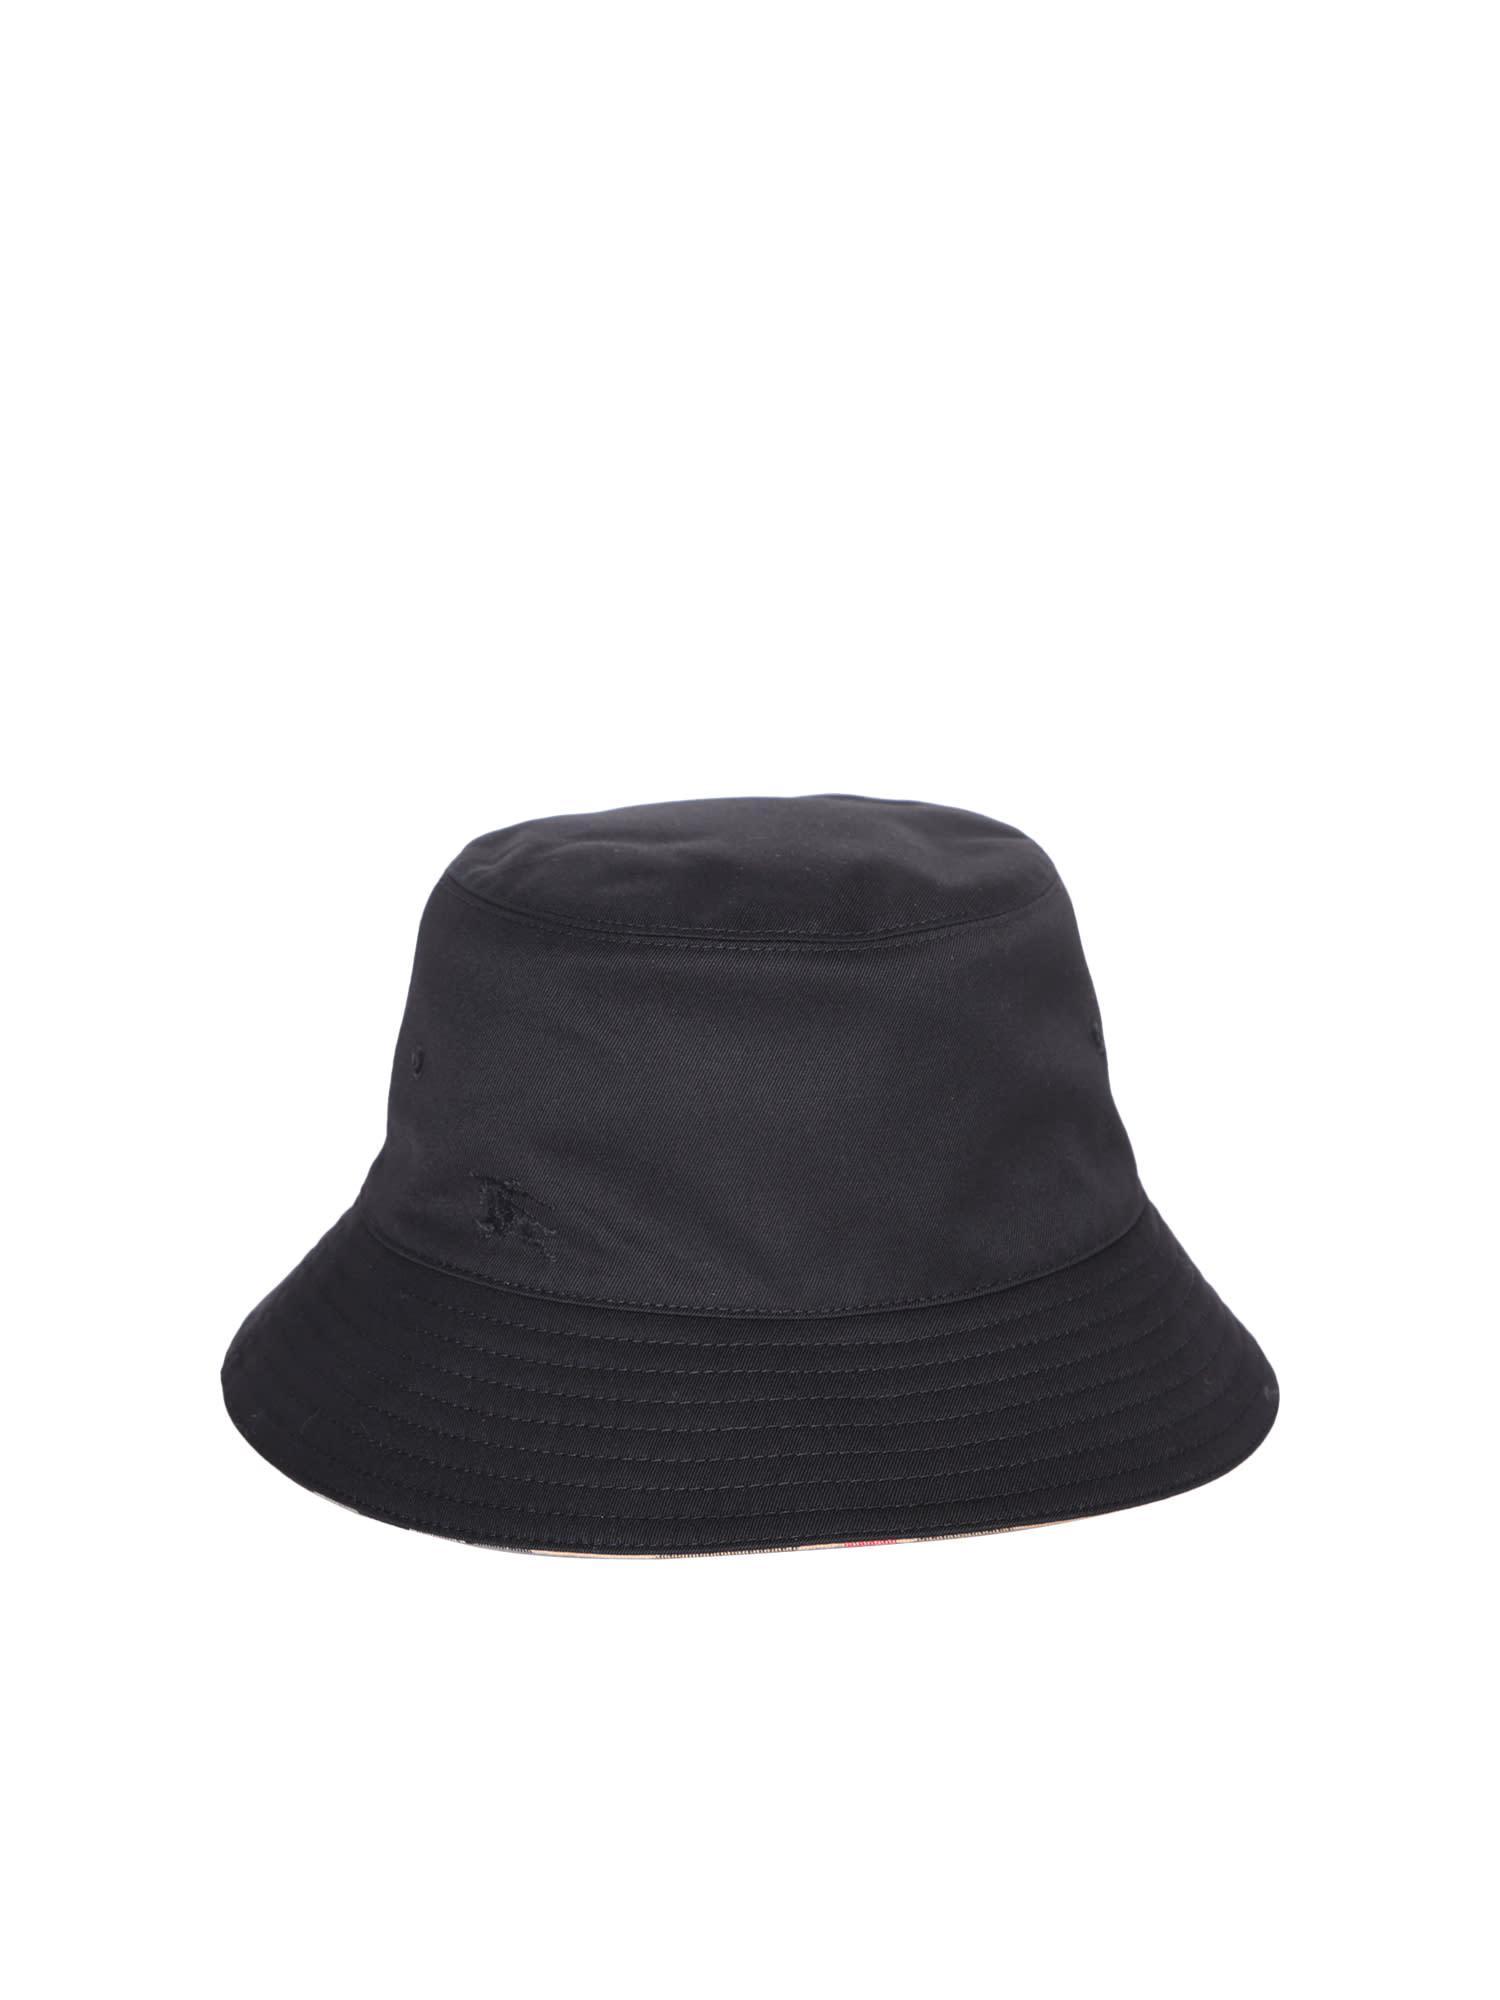 BURBERRY CHECK MOTIF BLACK BUCKET CAP